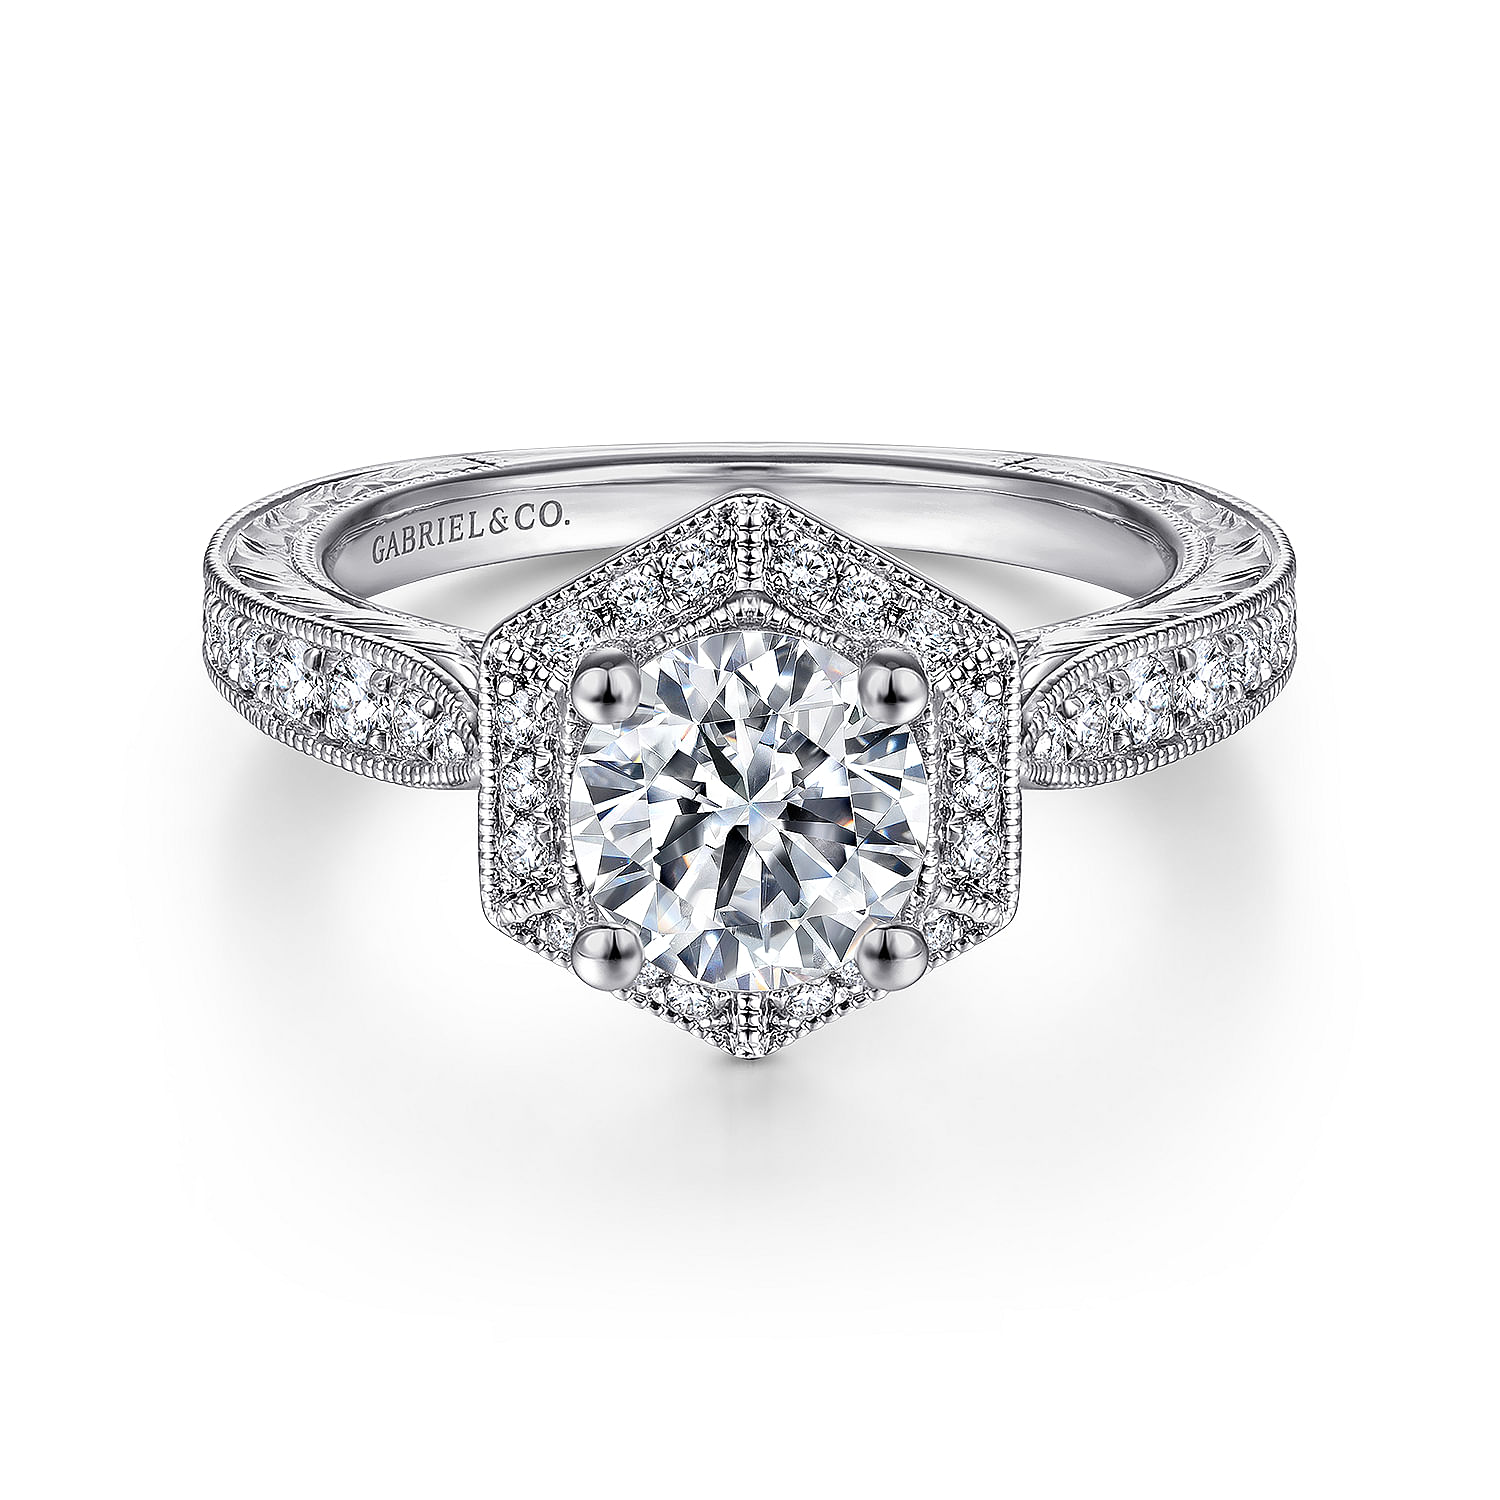 Kingston - Art Deco 14K White Gold Hexagonal Halo Round Diamond Engagement Ring